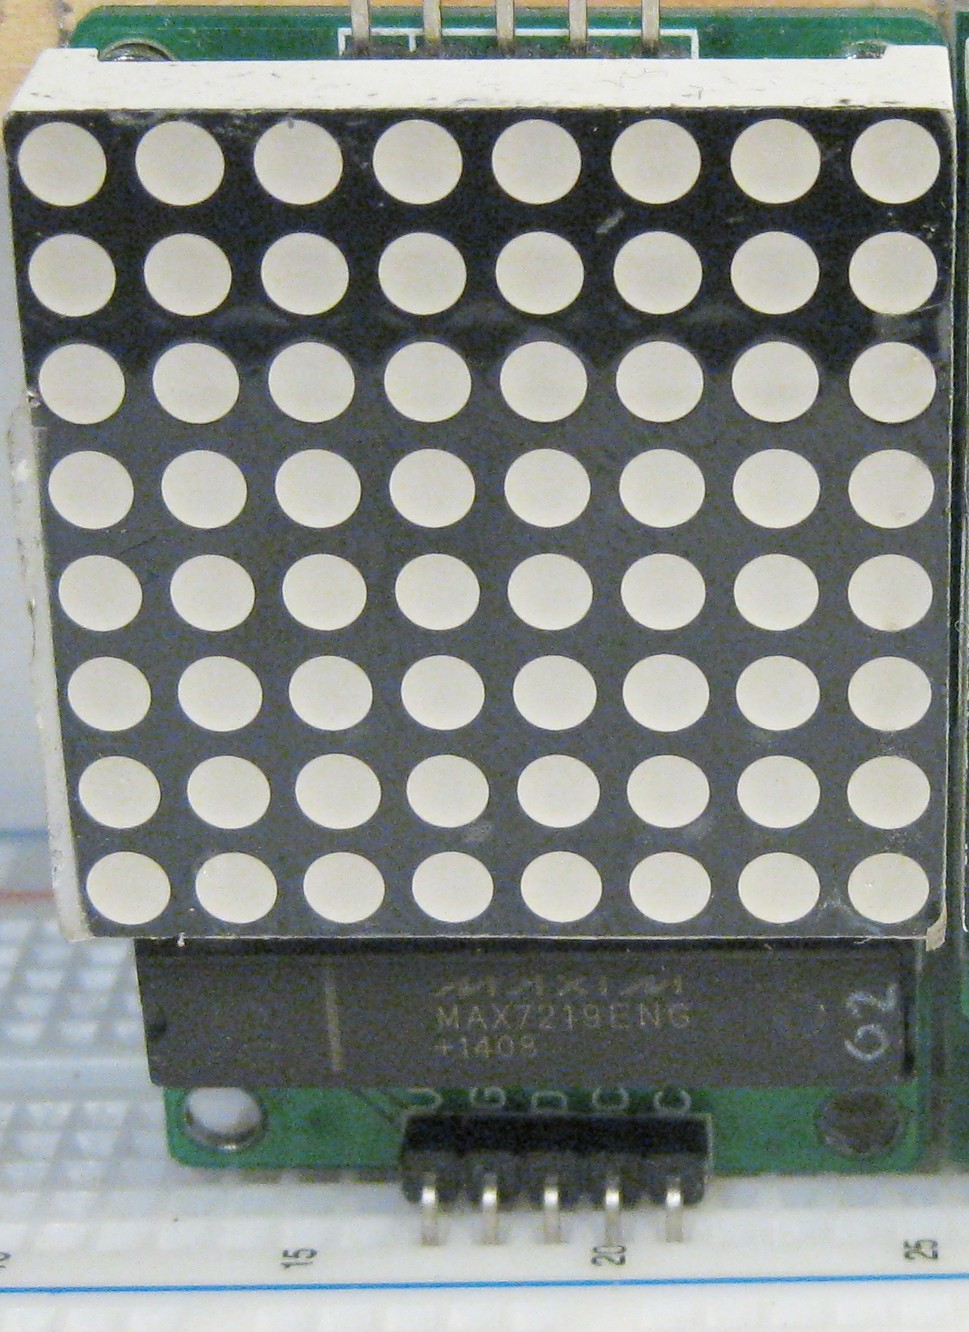 Enkelvoudige LED-matrix module.